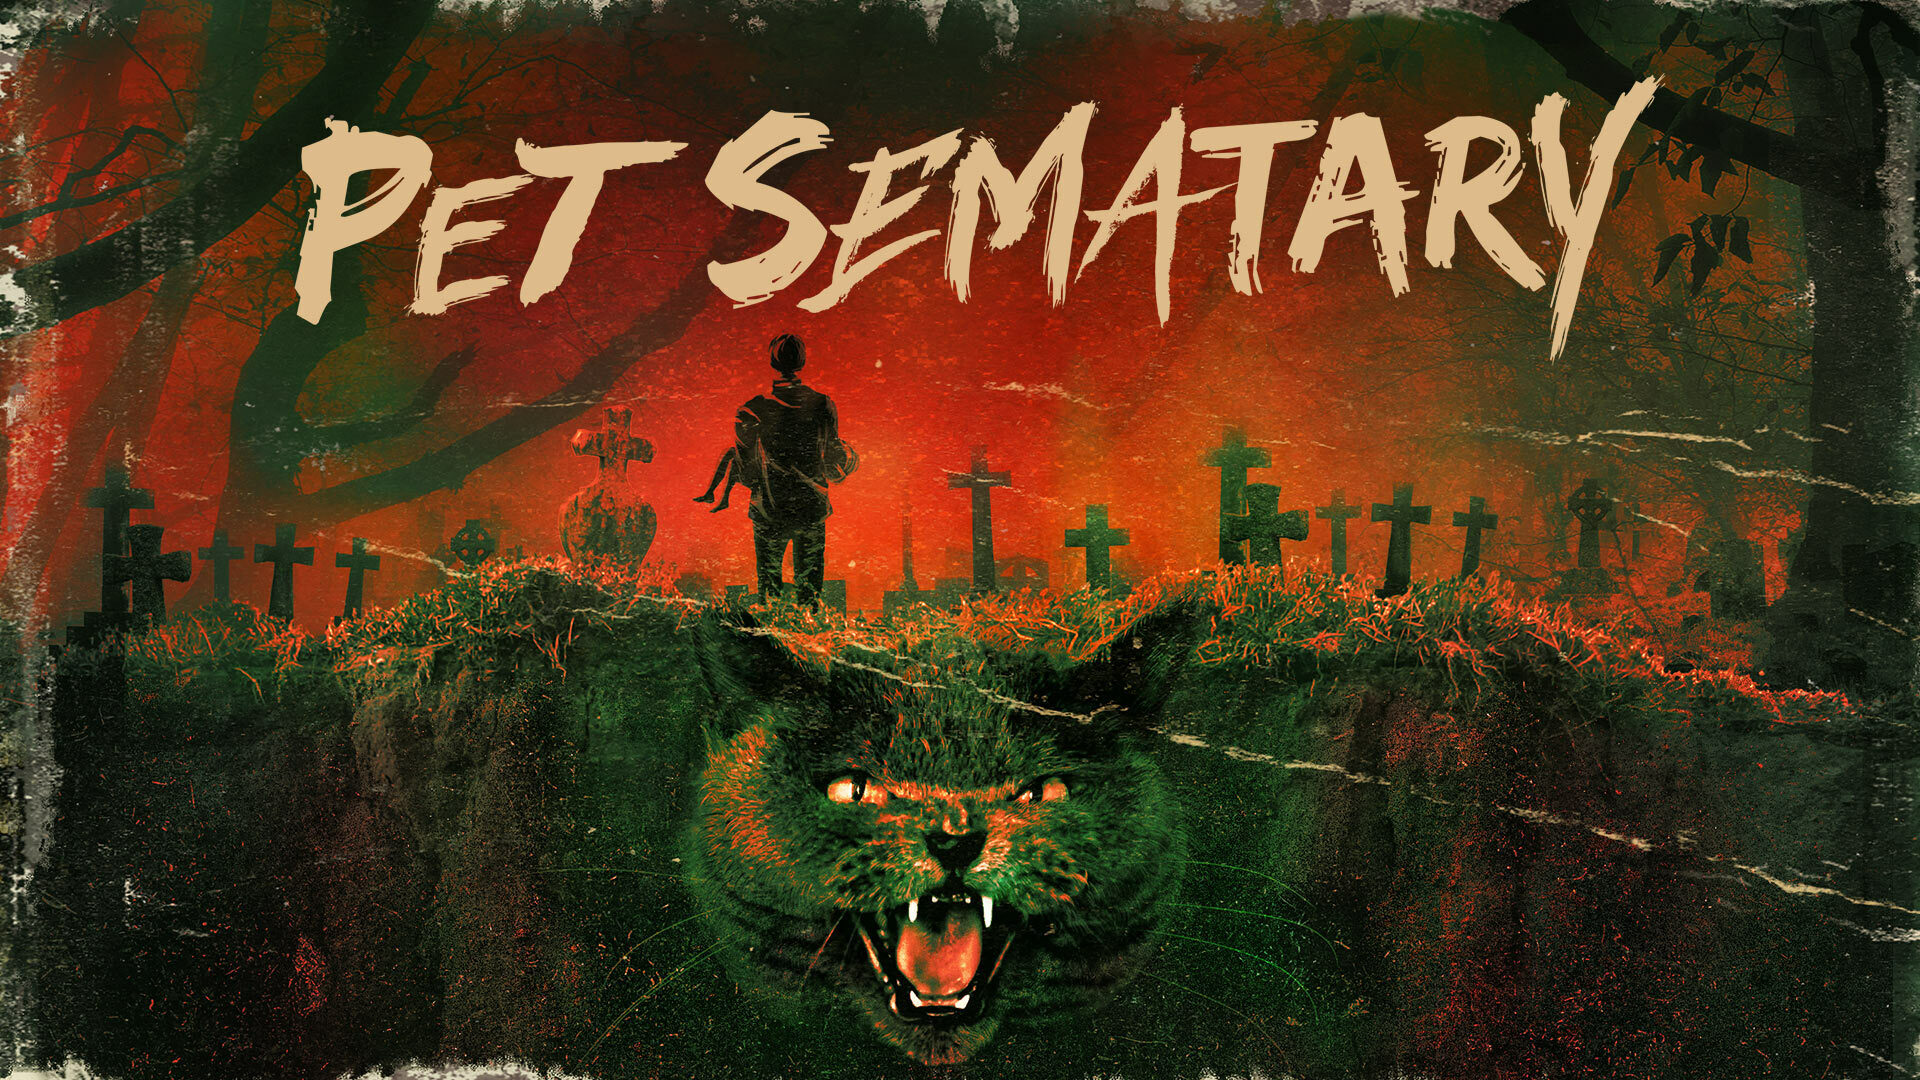 King pets. Постеры кладбище домашних животных - Pet Sematary (1989).